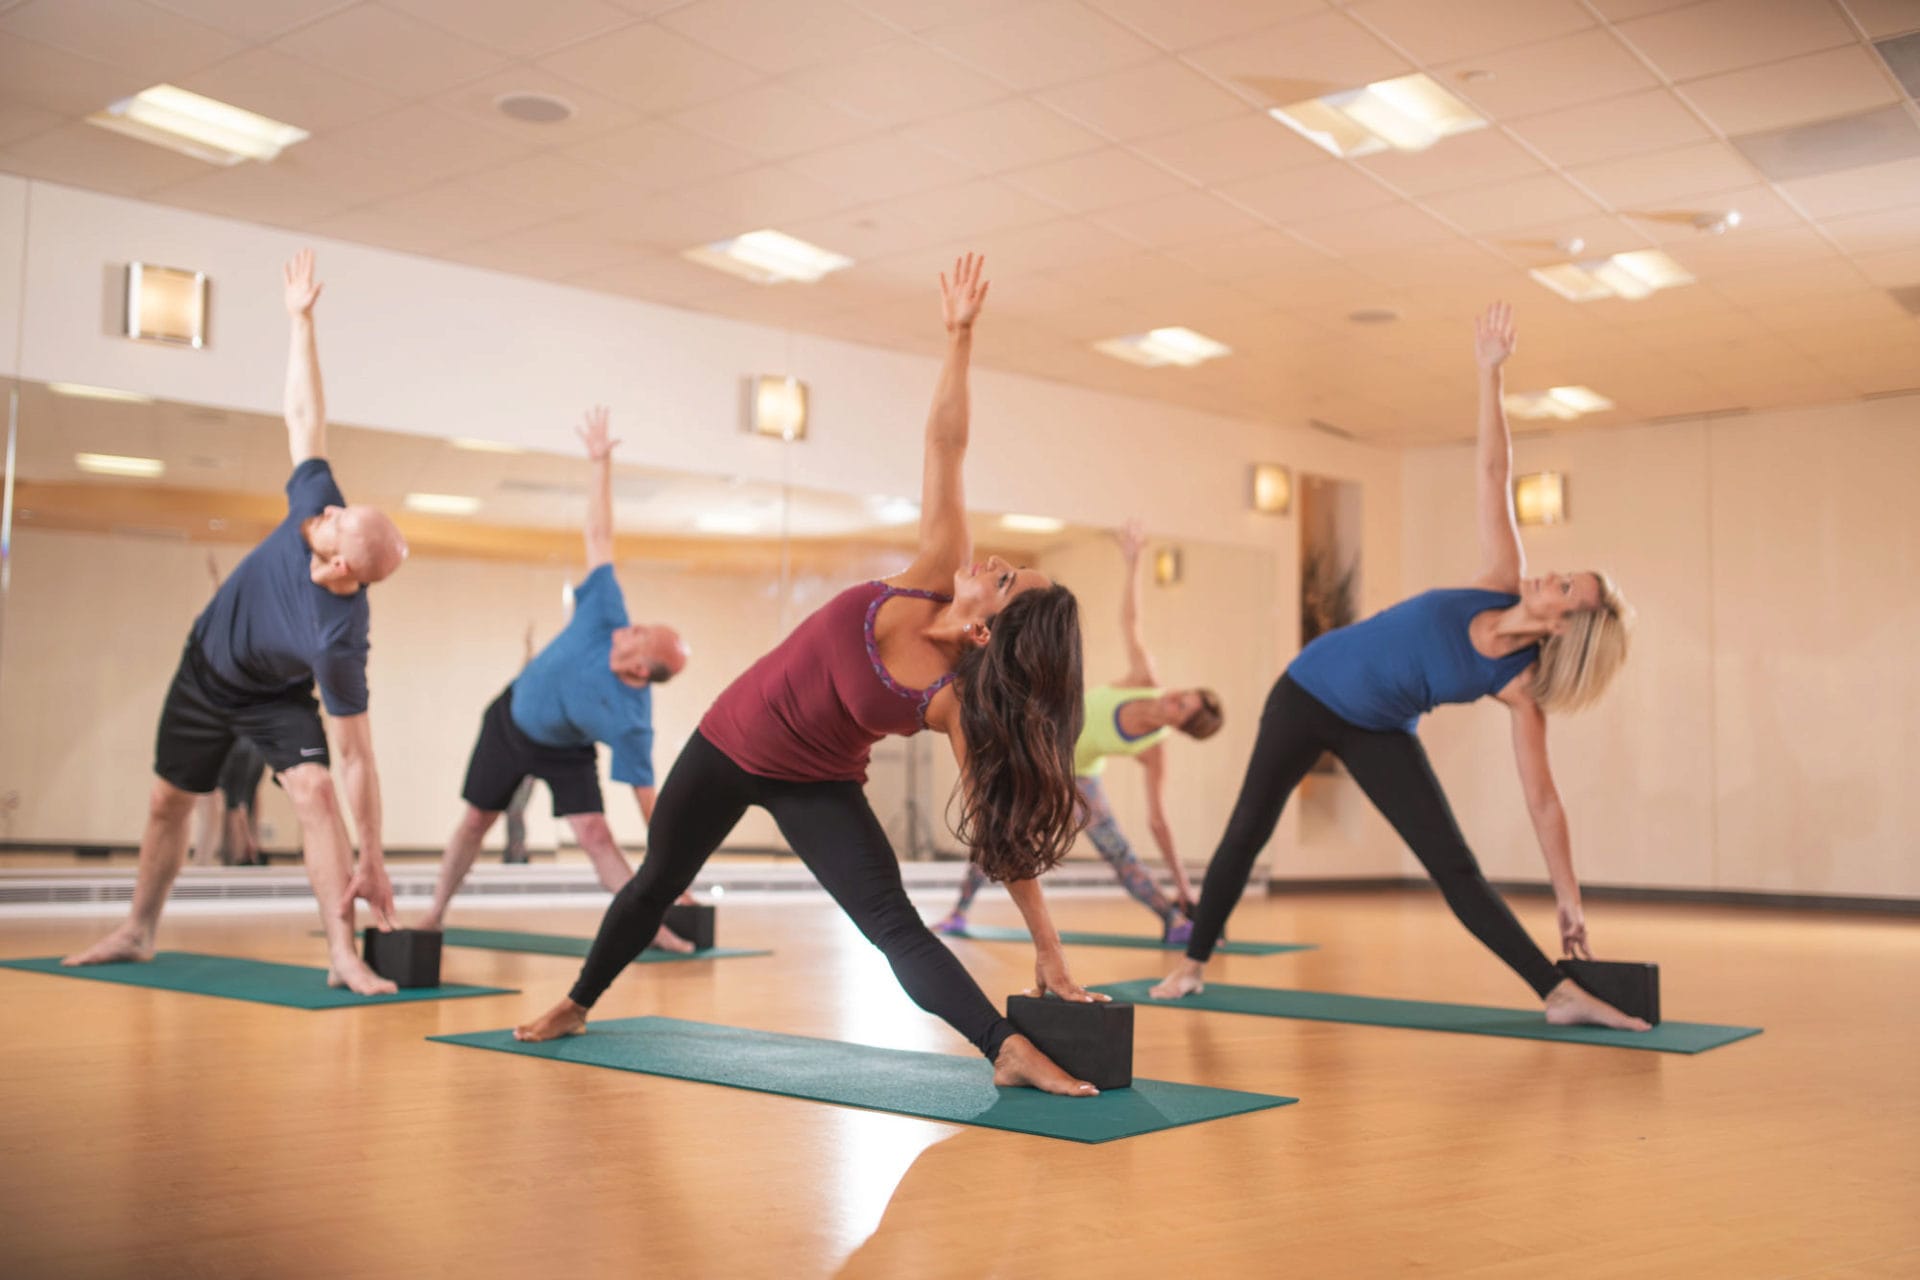 Yoga Club, Yoga Studio